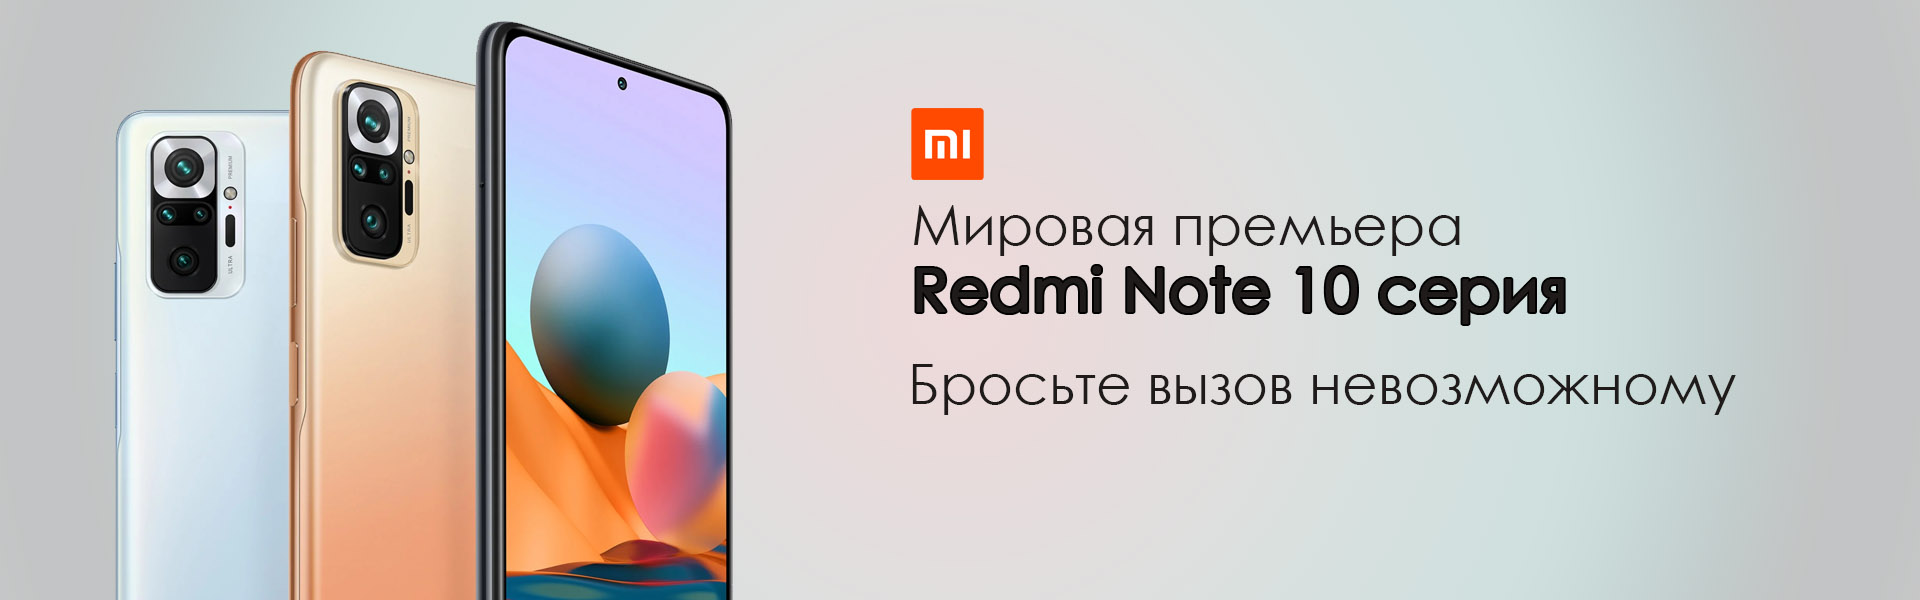 Redmi Note 10 серия